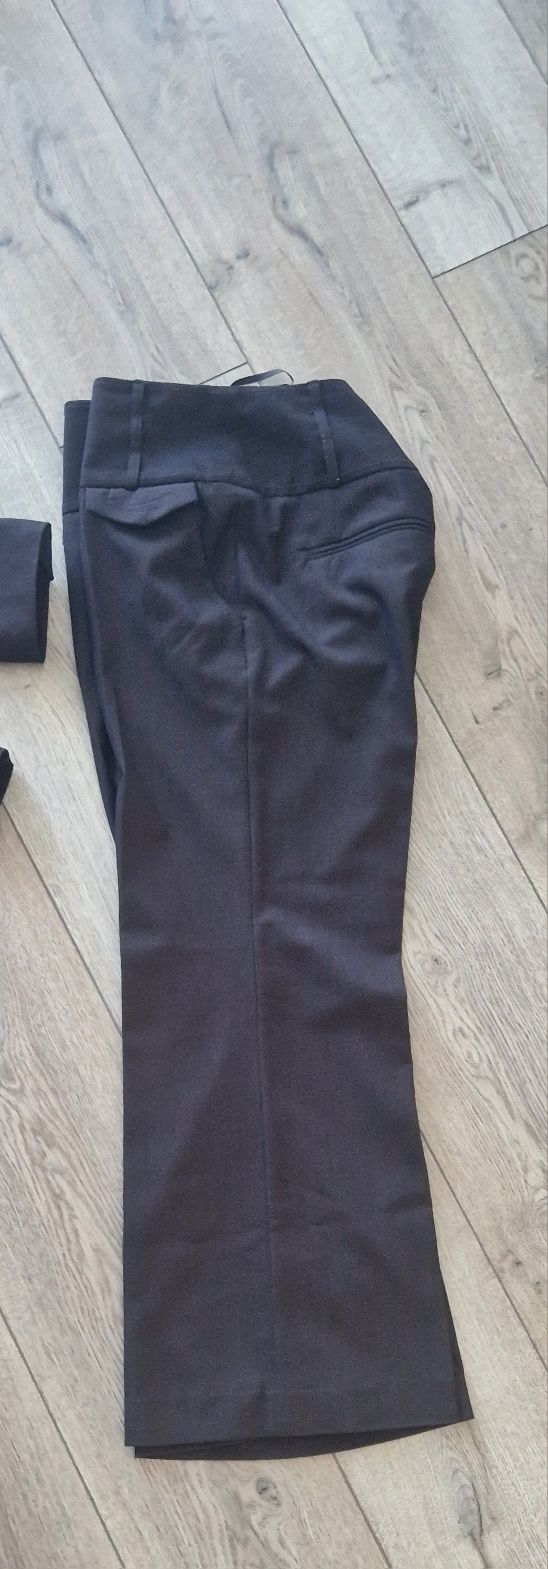 Komplet marynarka + spodnie Mango Zara H&M Next 42/ XL / 12